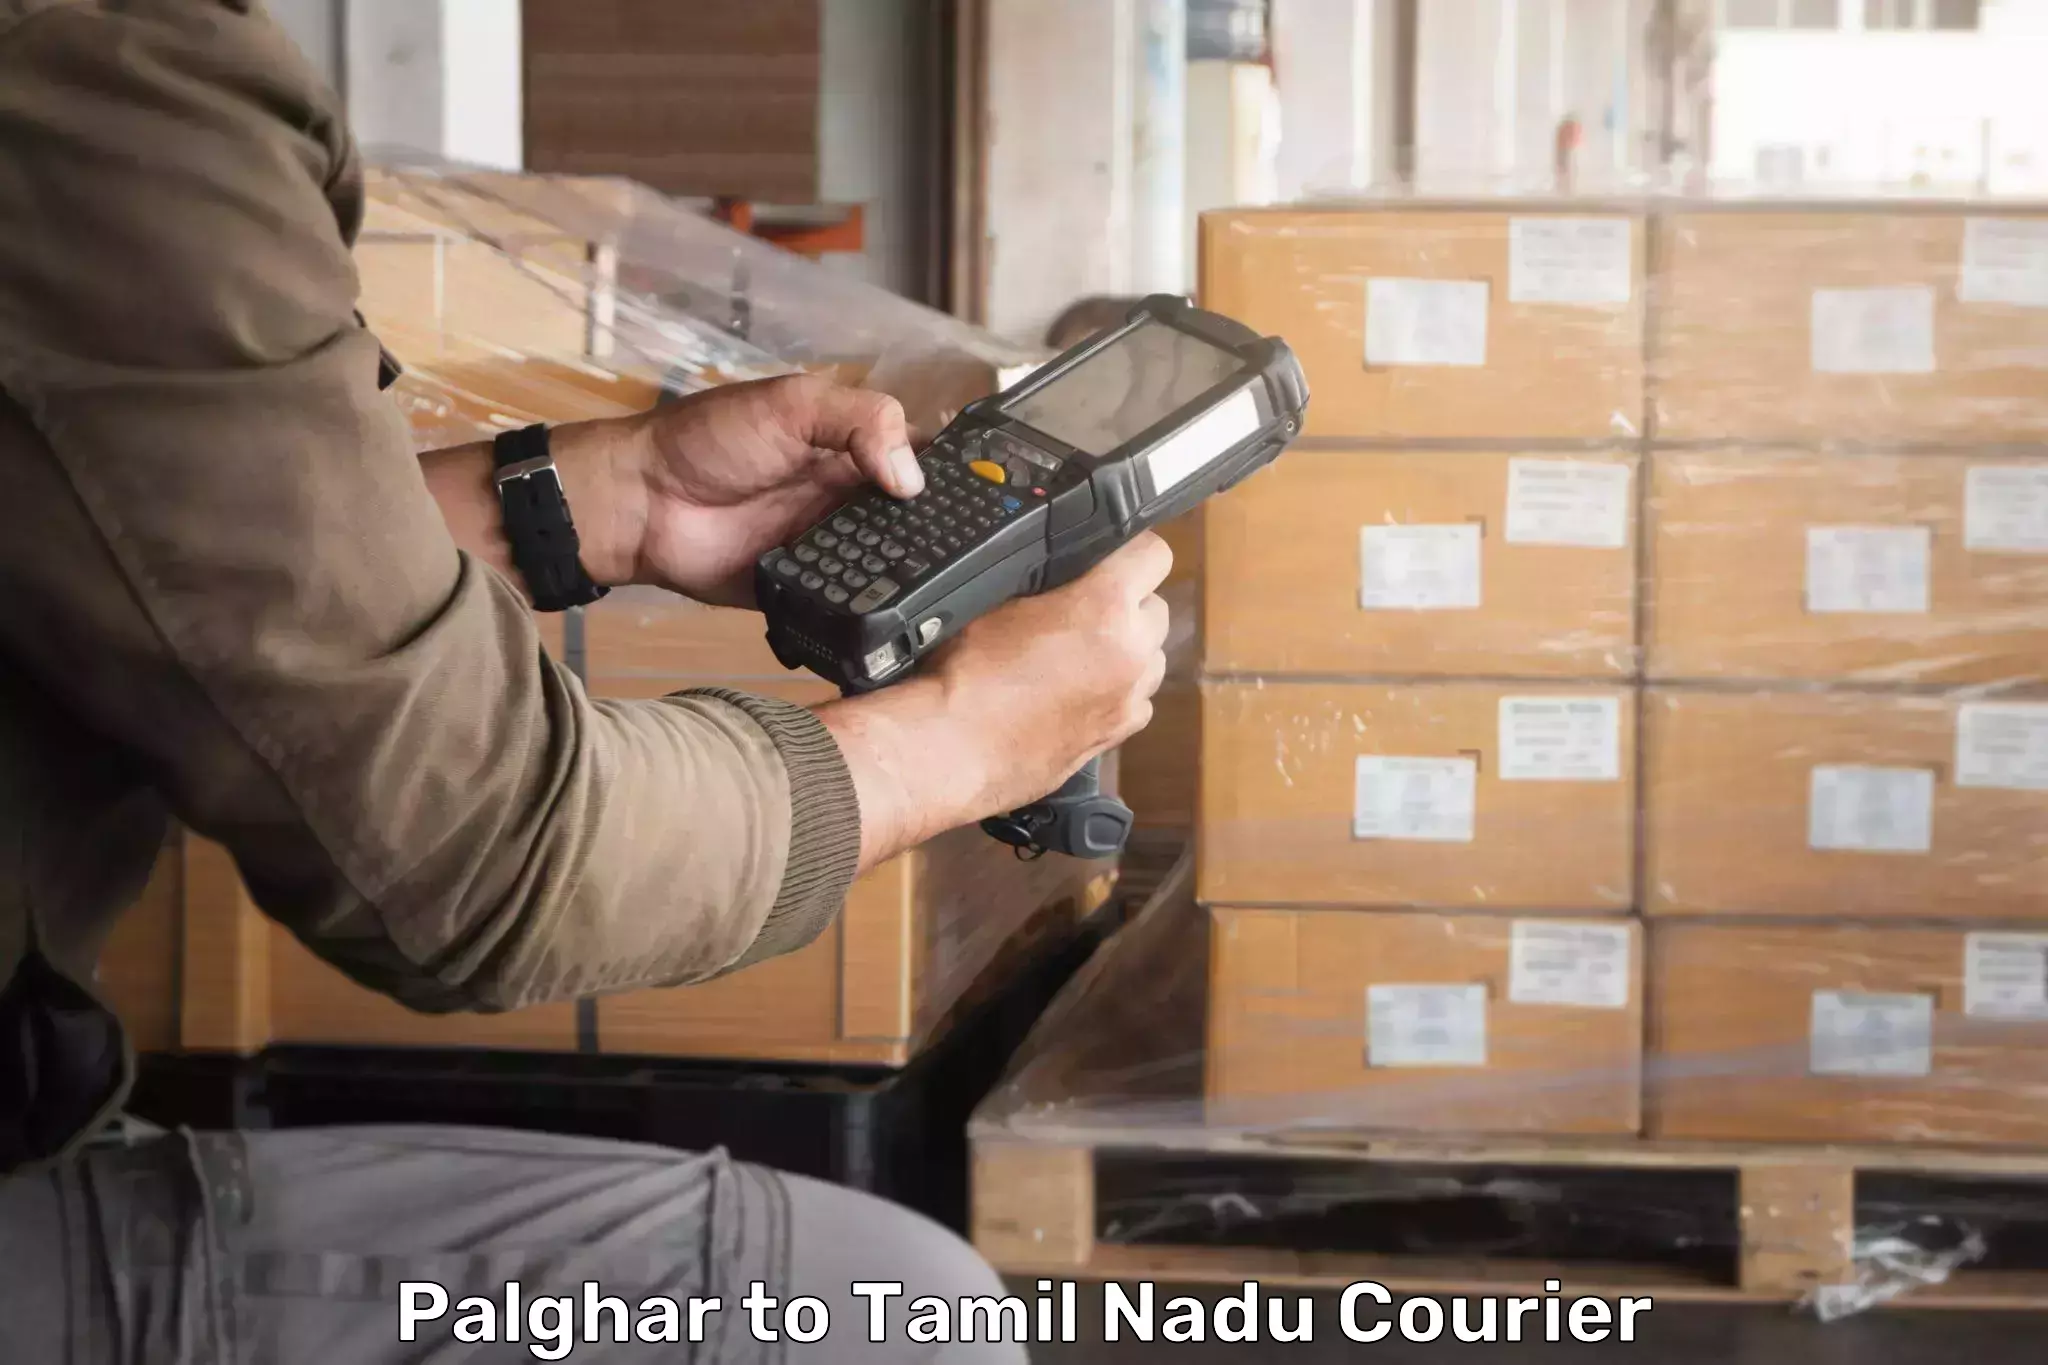 Advanced shipping network Palghar to Tiruchendur